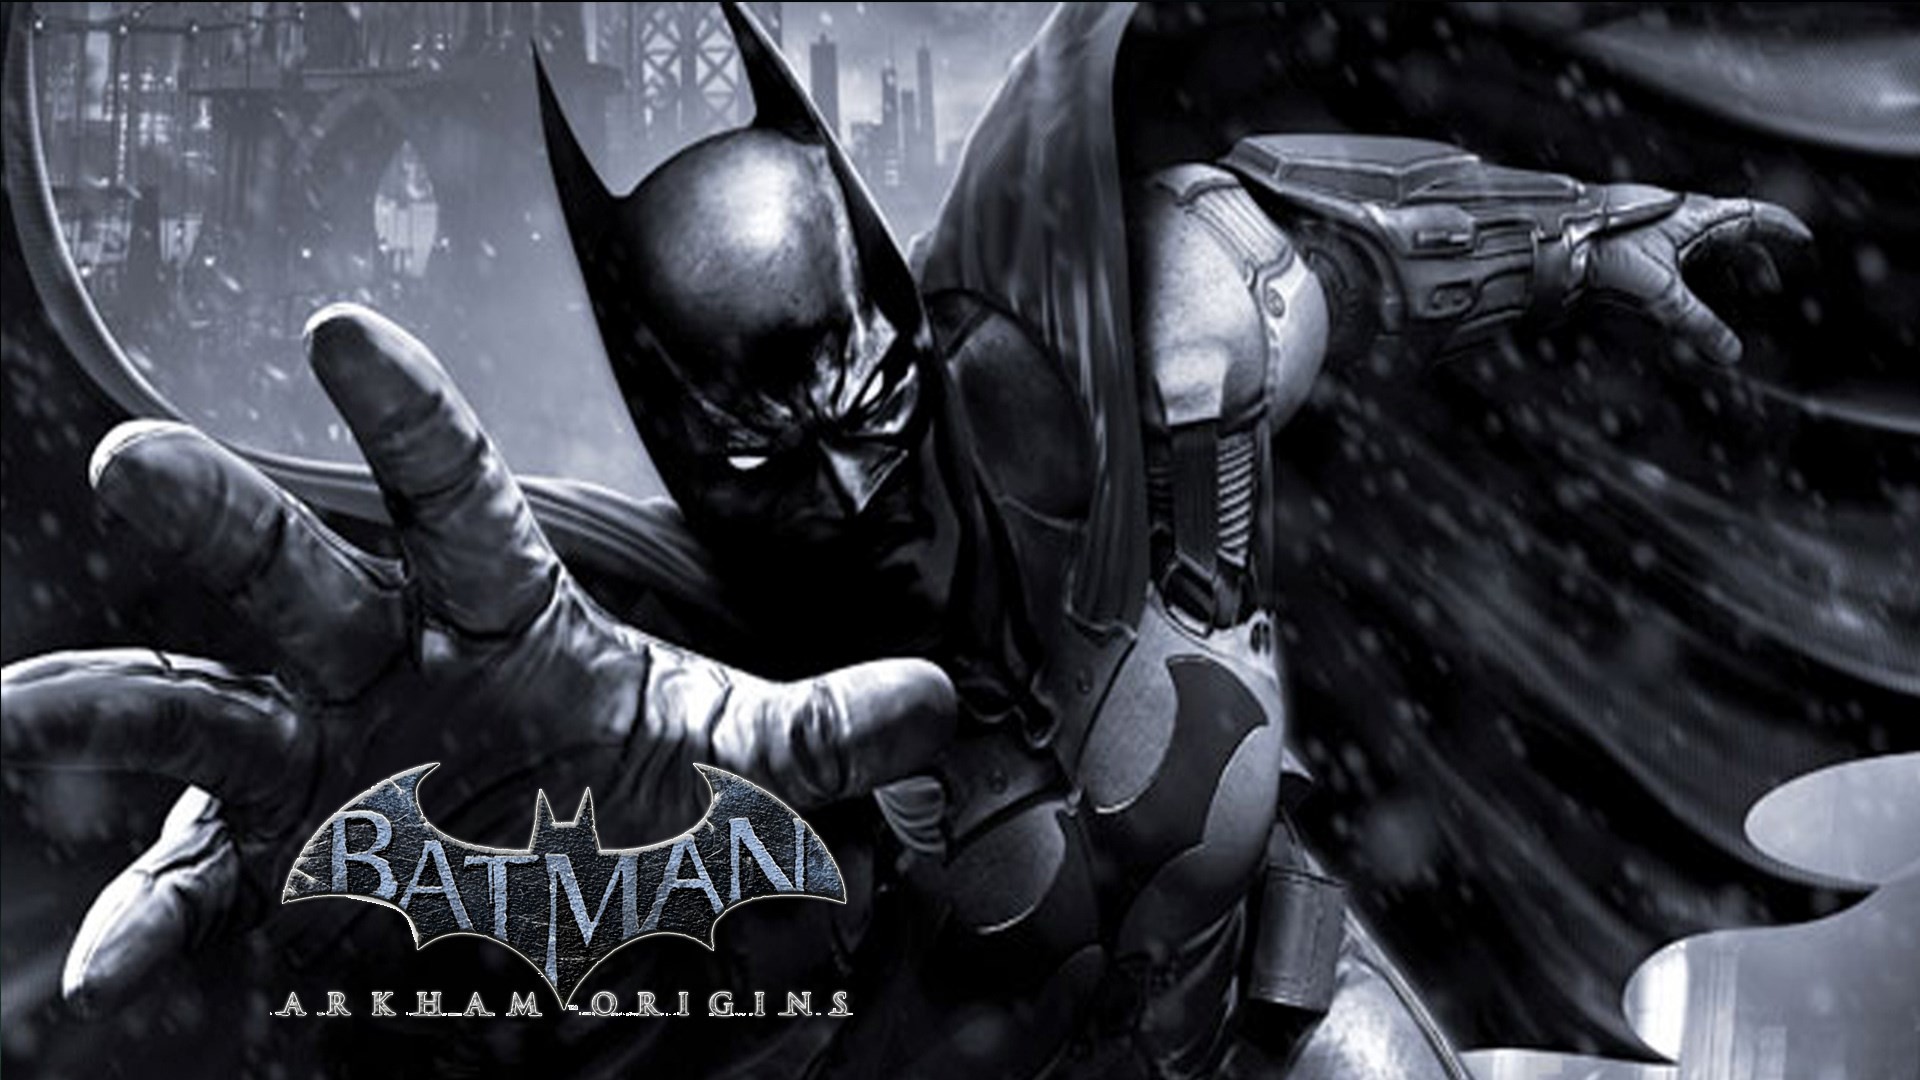 Free screensaver wallpapers for batman arkham origins – batman arkham origins category